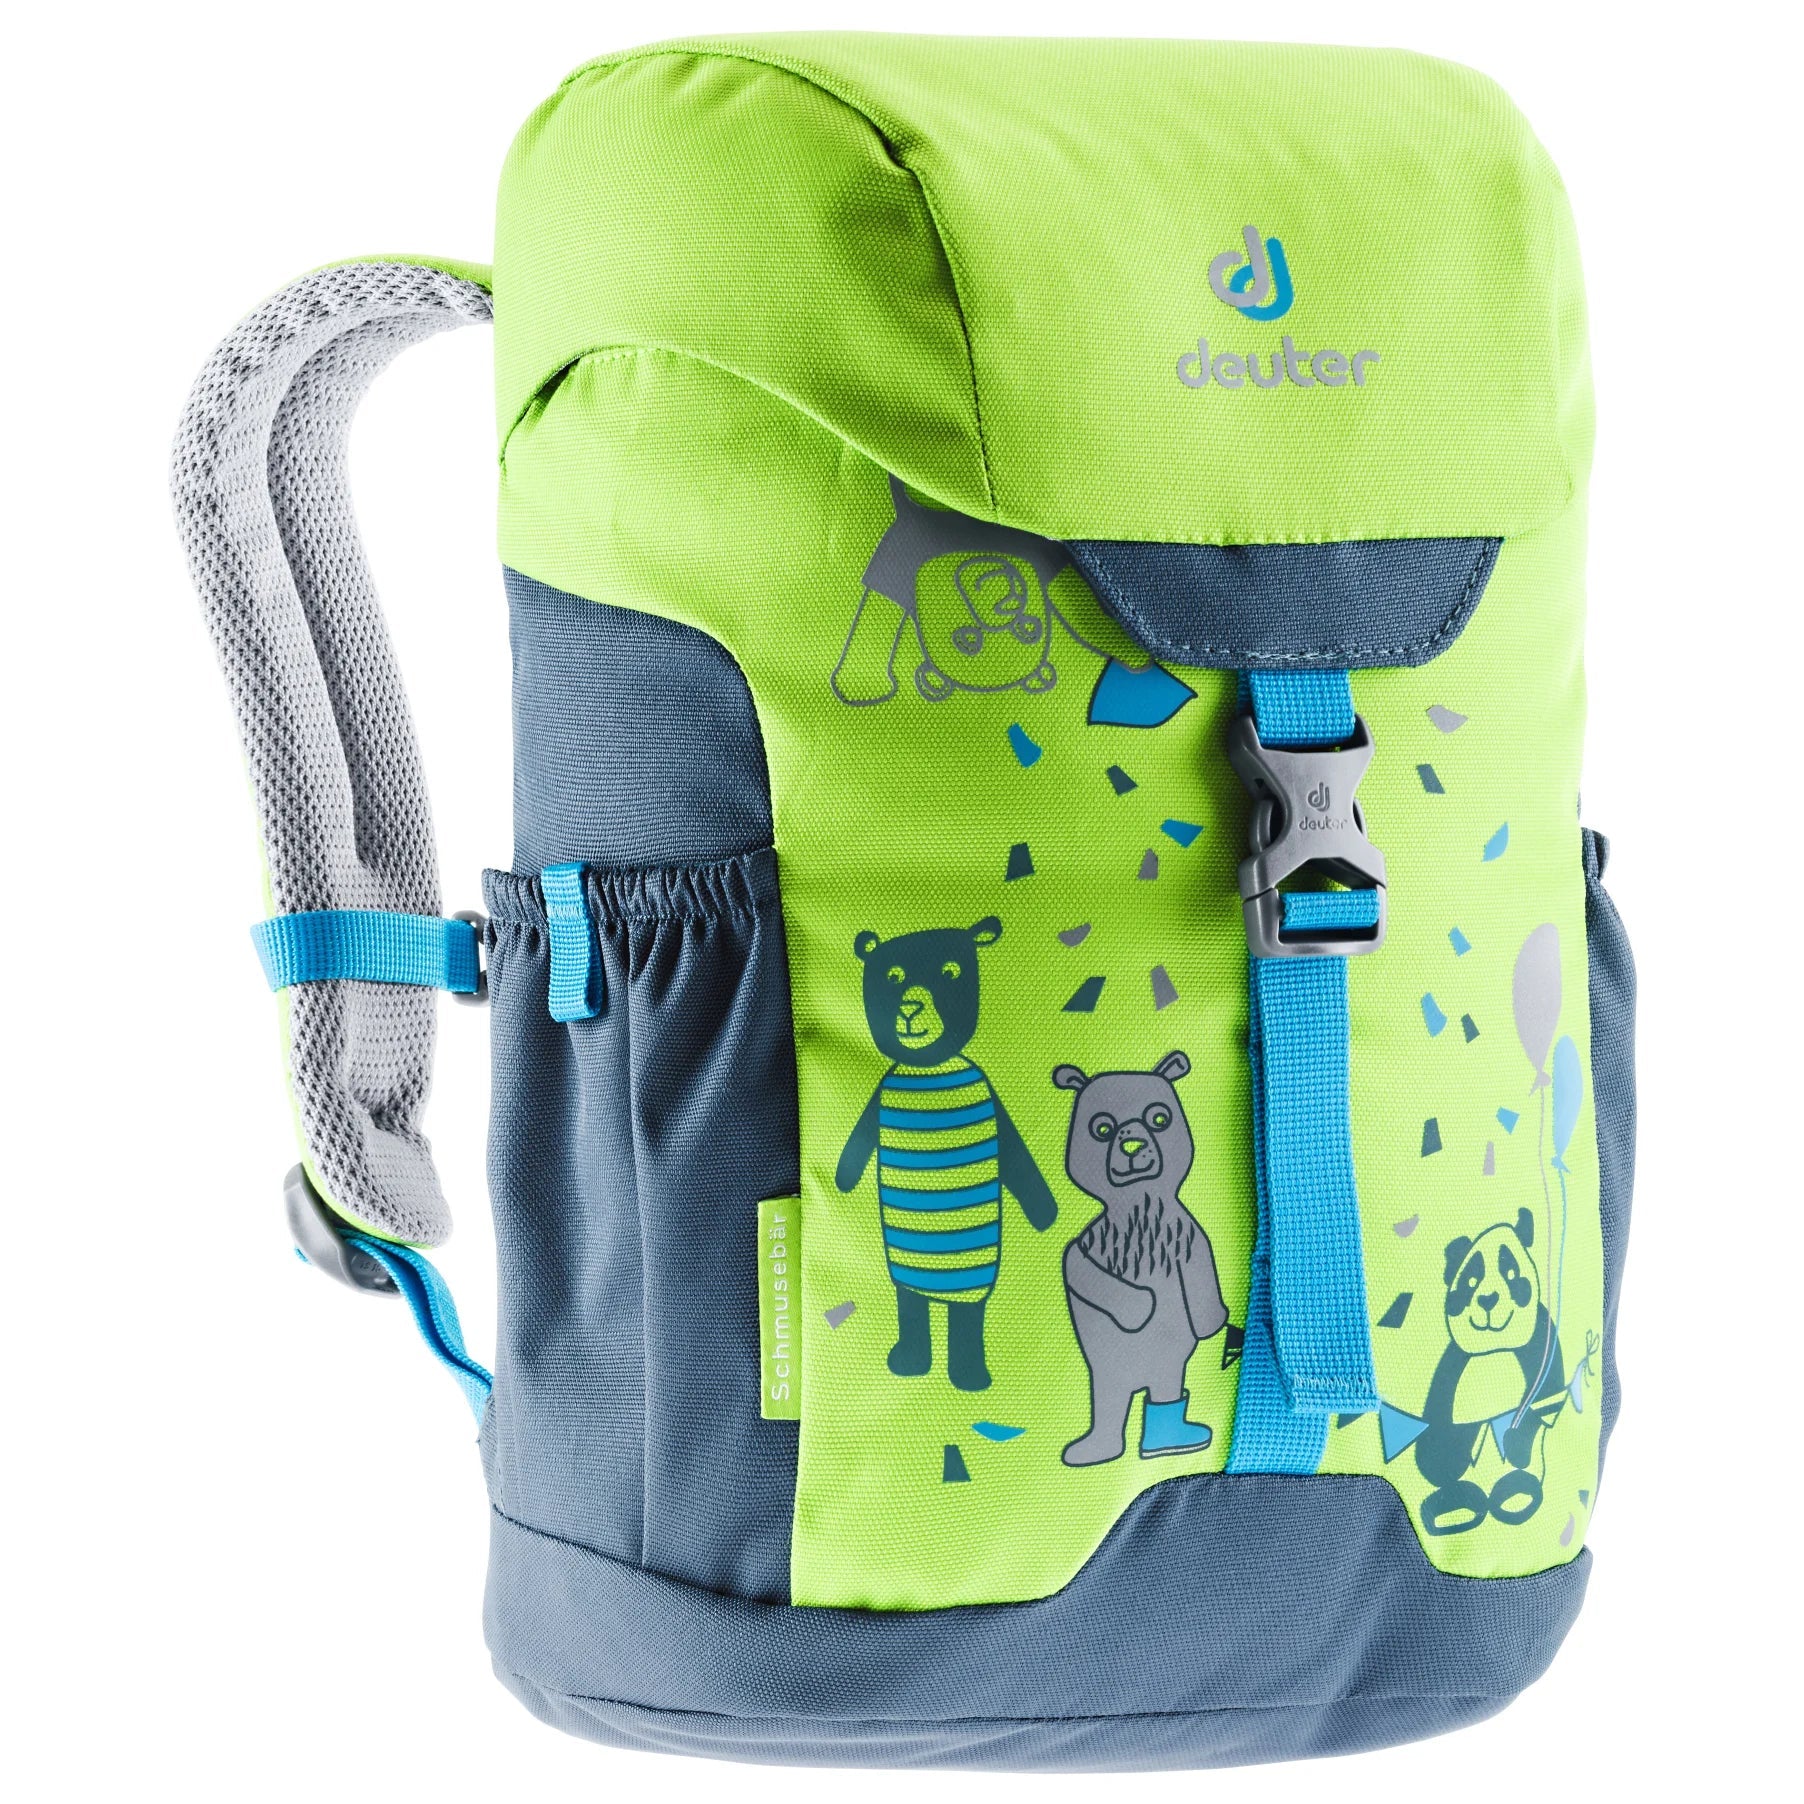 Deuter Daypack Schmusebär children's backpack 33 cm - Dustblue-Alpinegreen